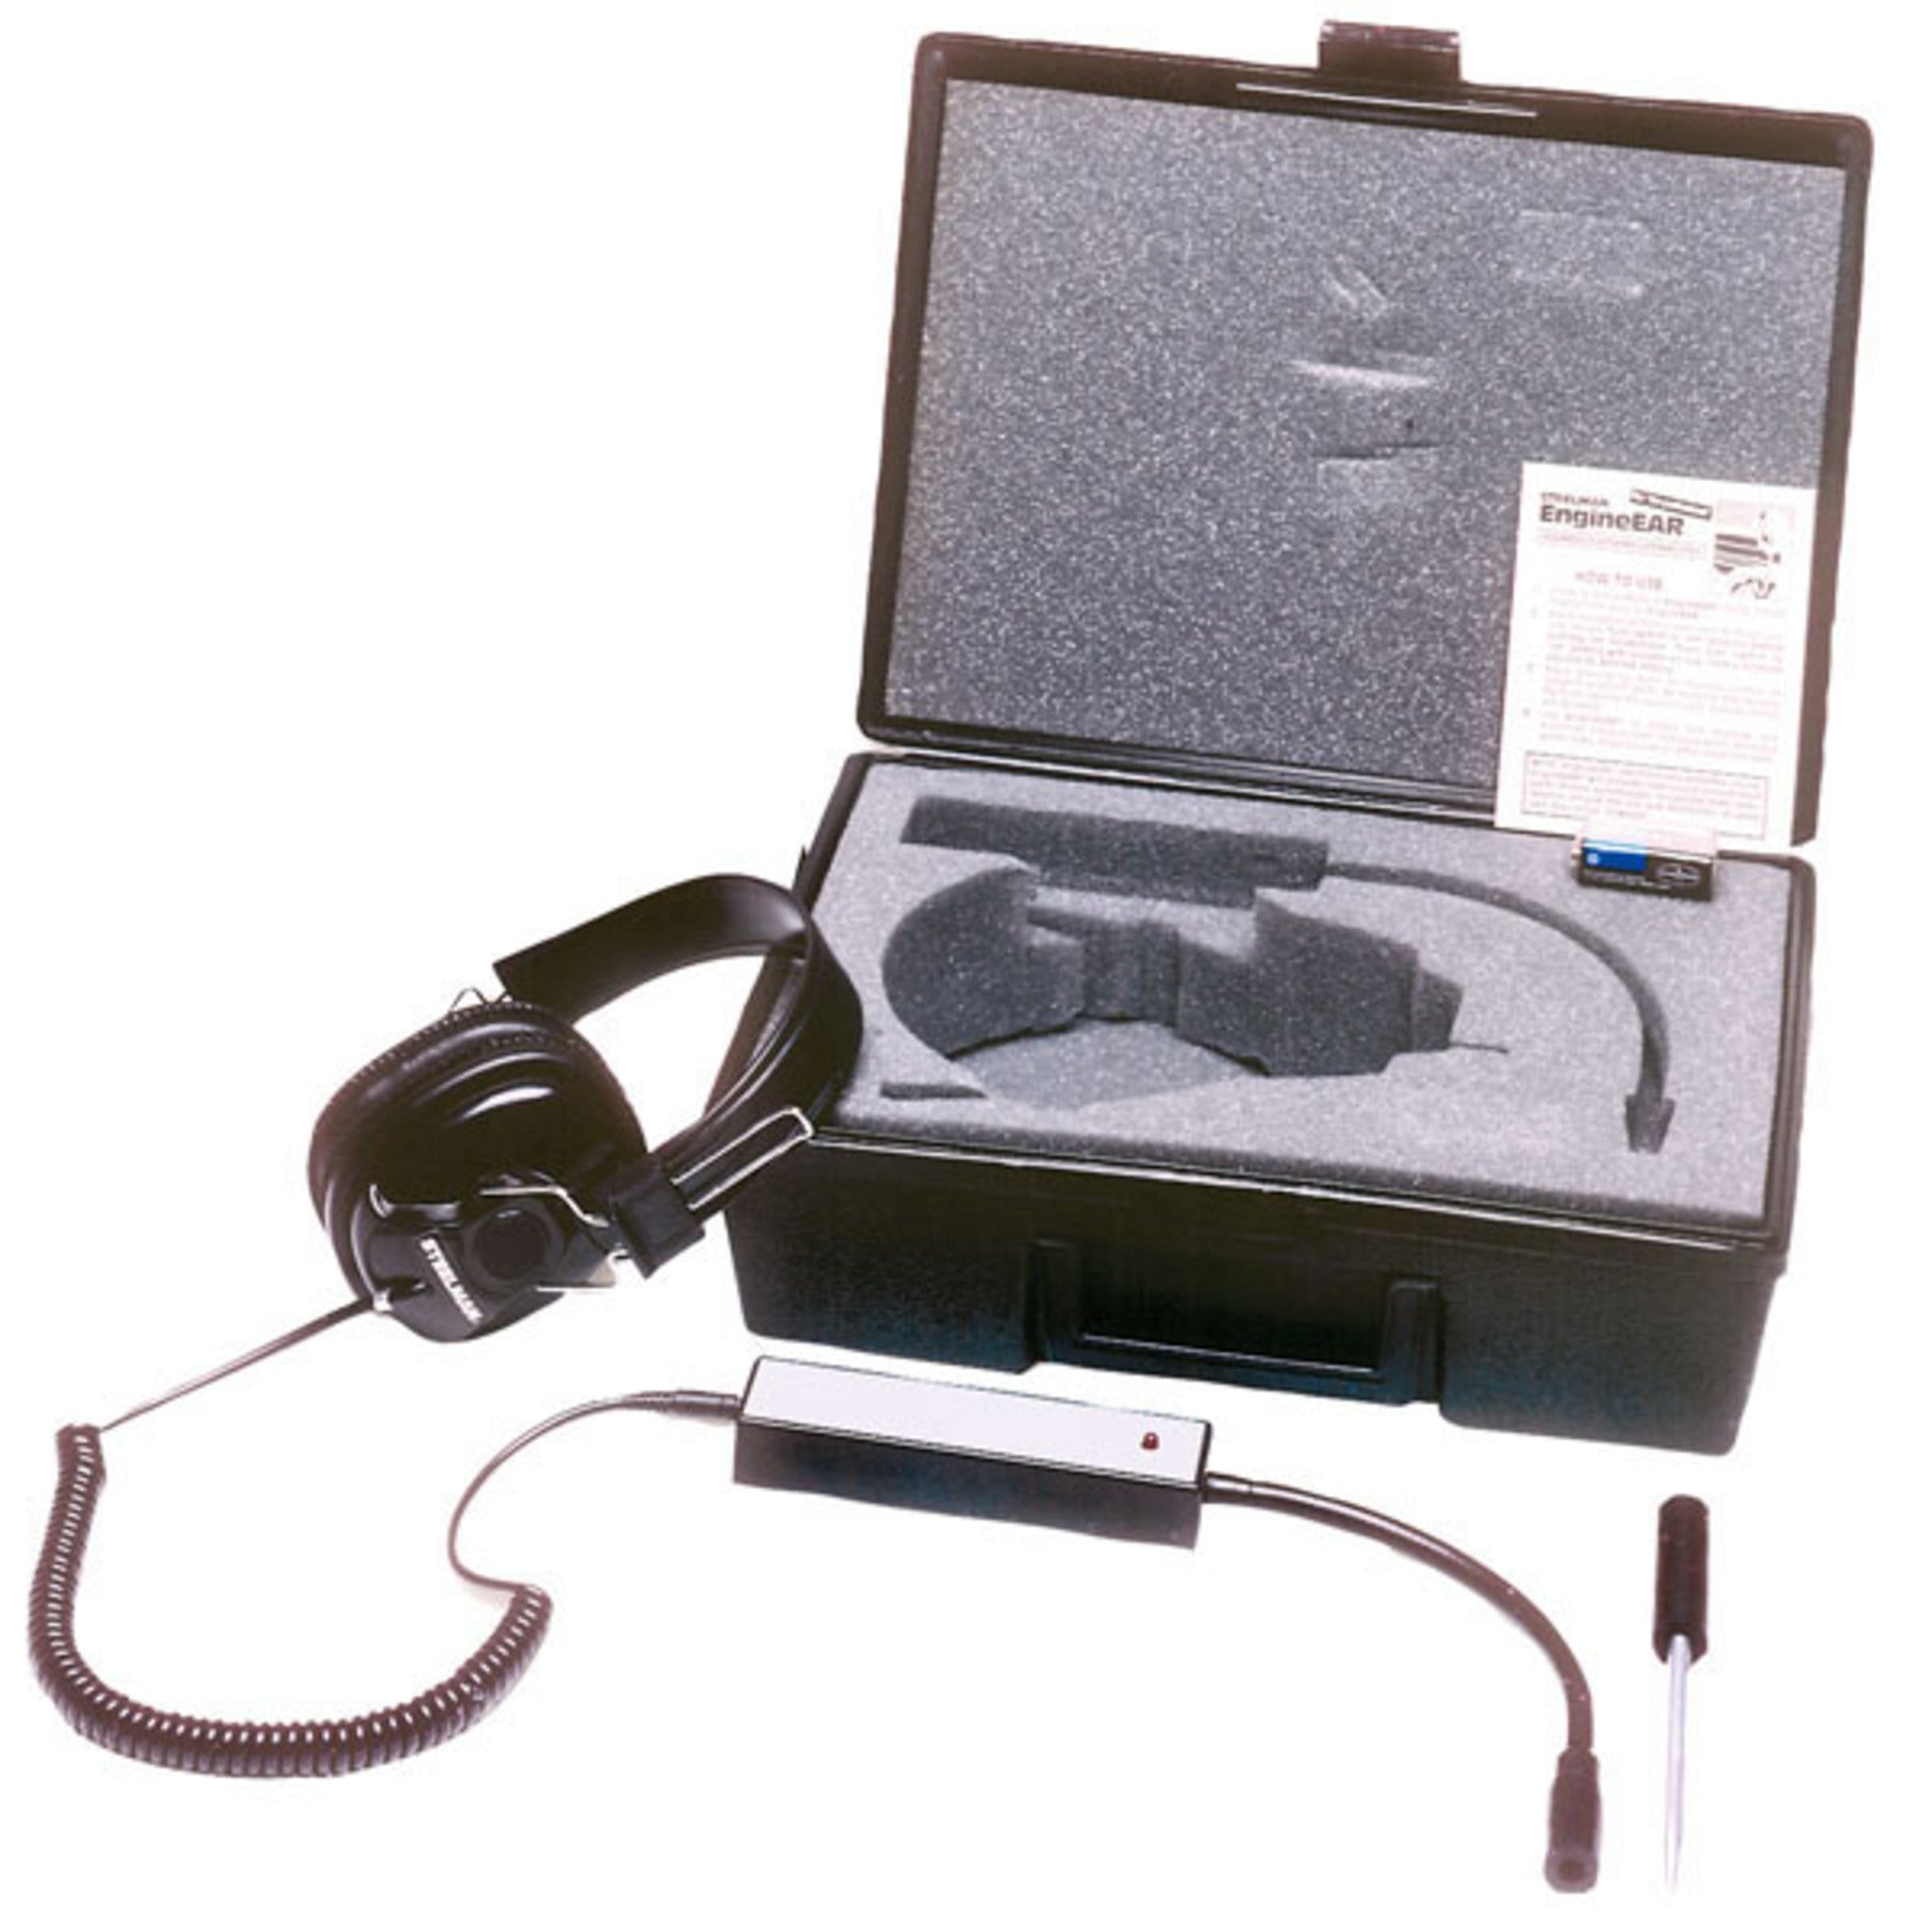 Steelman Engineear Ii Electronic Automotive Diagnostic Stethoscope